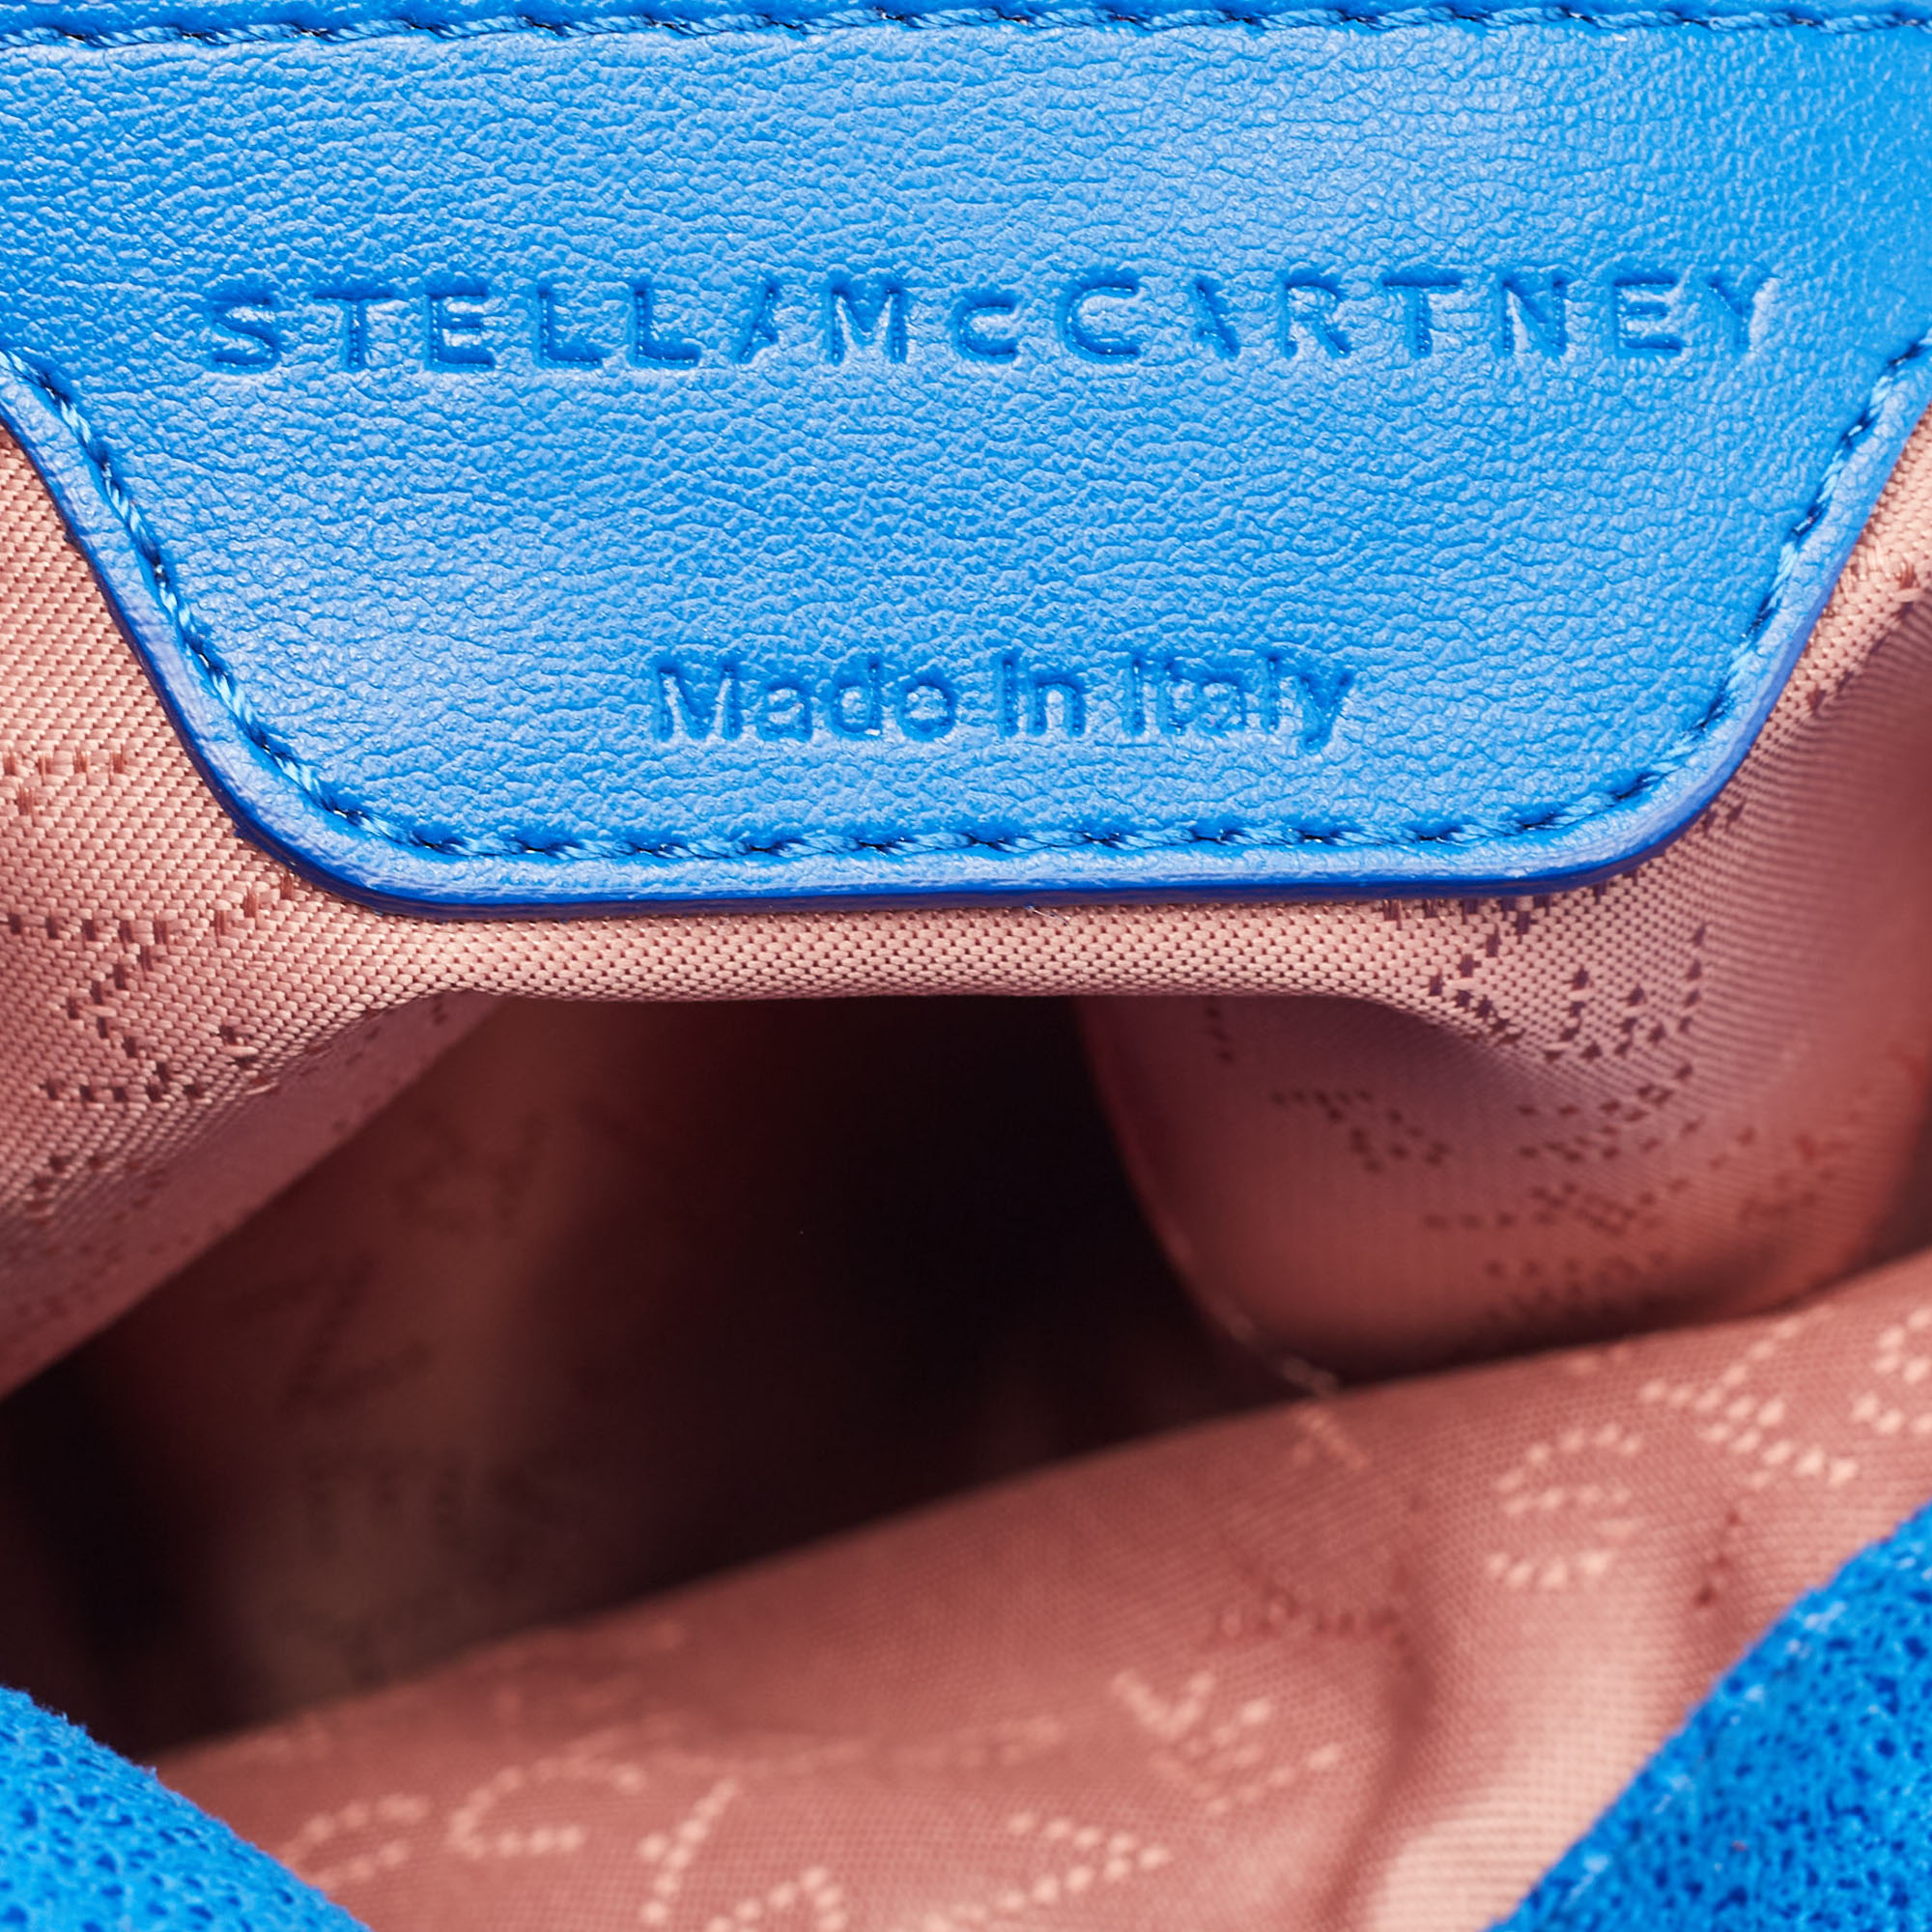 Stella McCartney Blue Faux Leather Mini Falabella Crossbody Bag